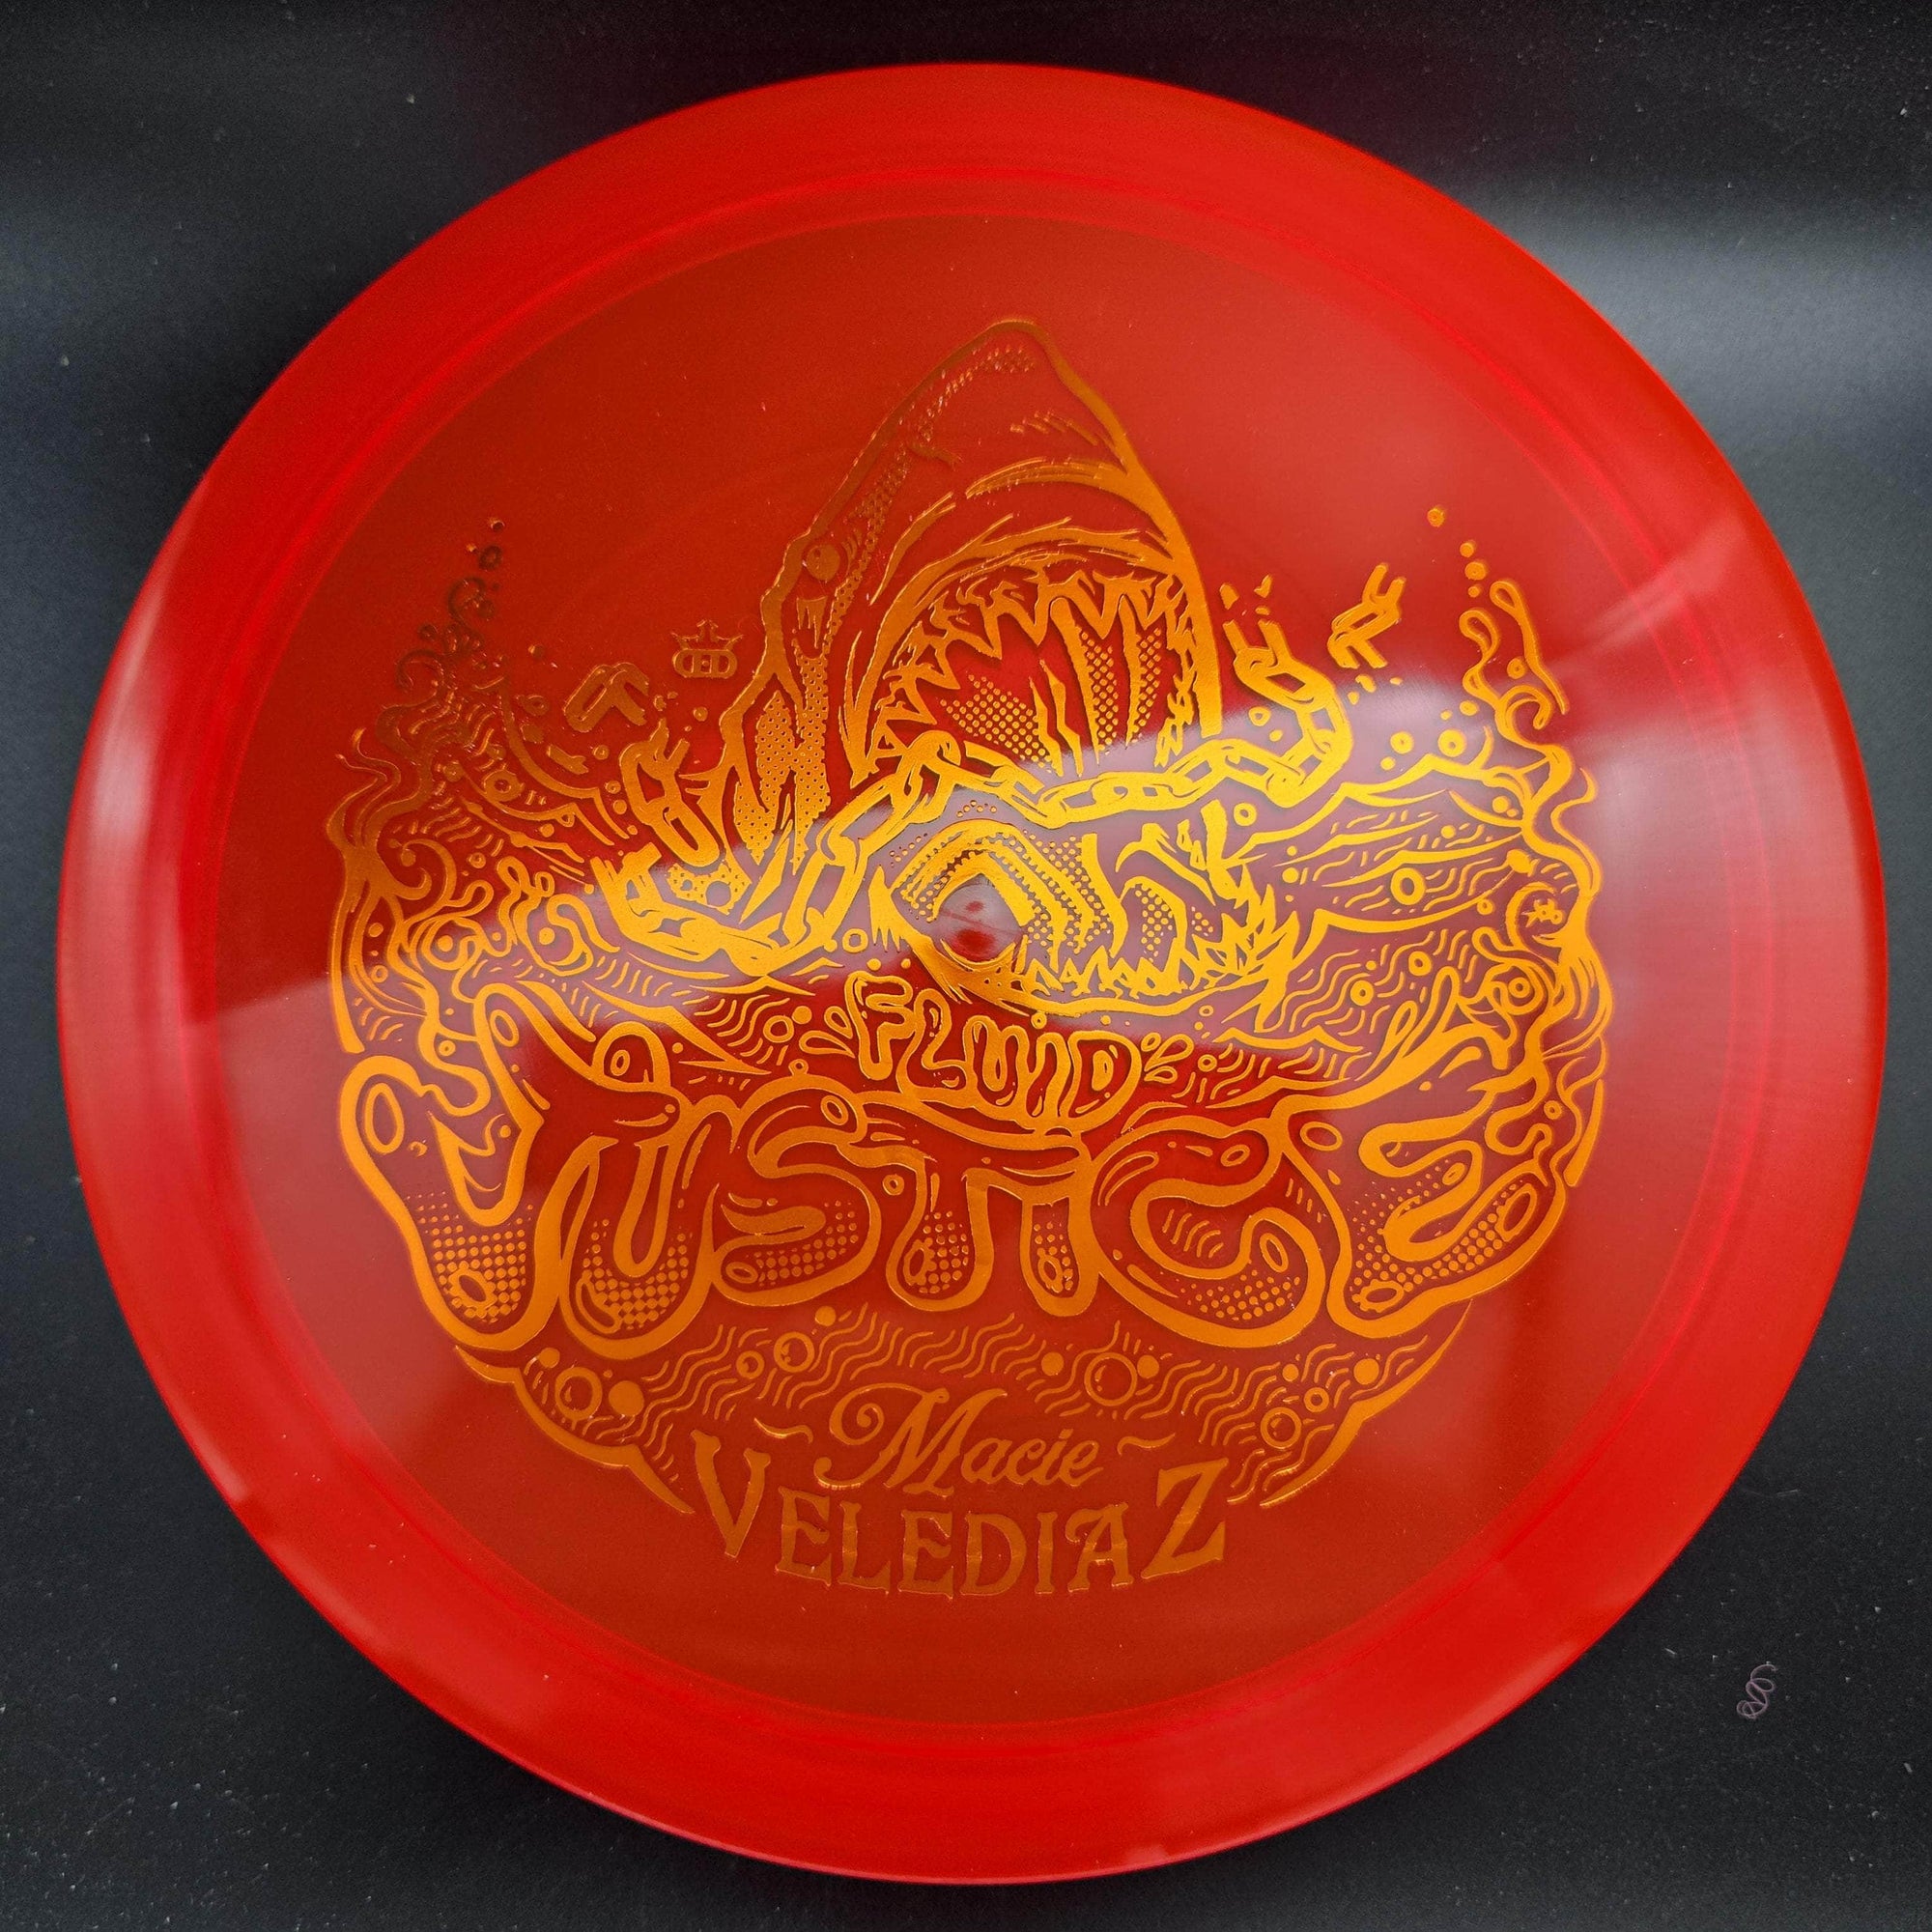 Dynamic Discs Mid Range Red Copper Stamp 173g Justice, Fluid, Macie Velediaz 2023